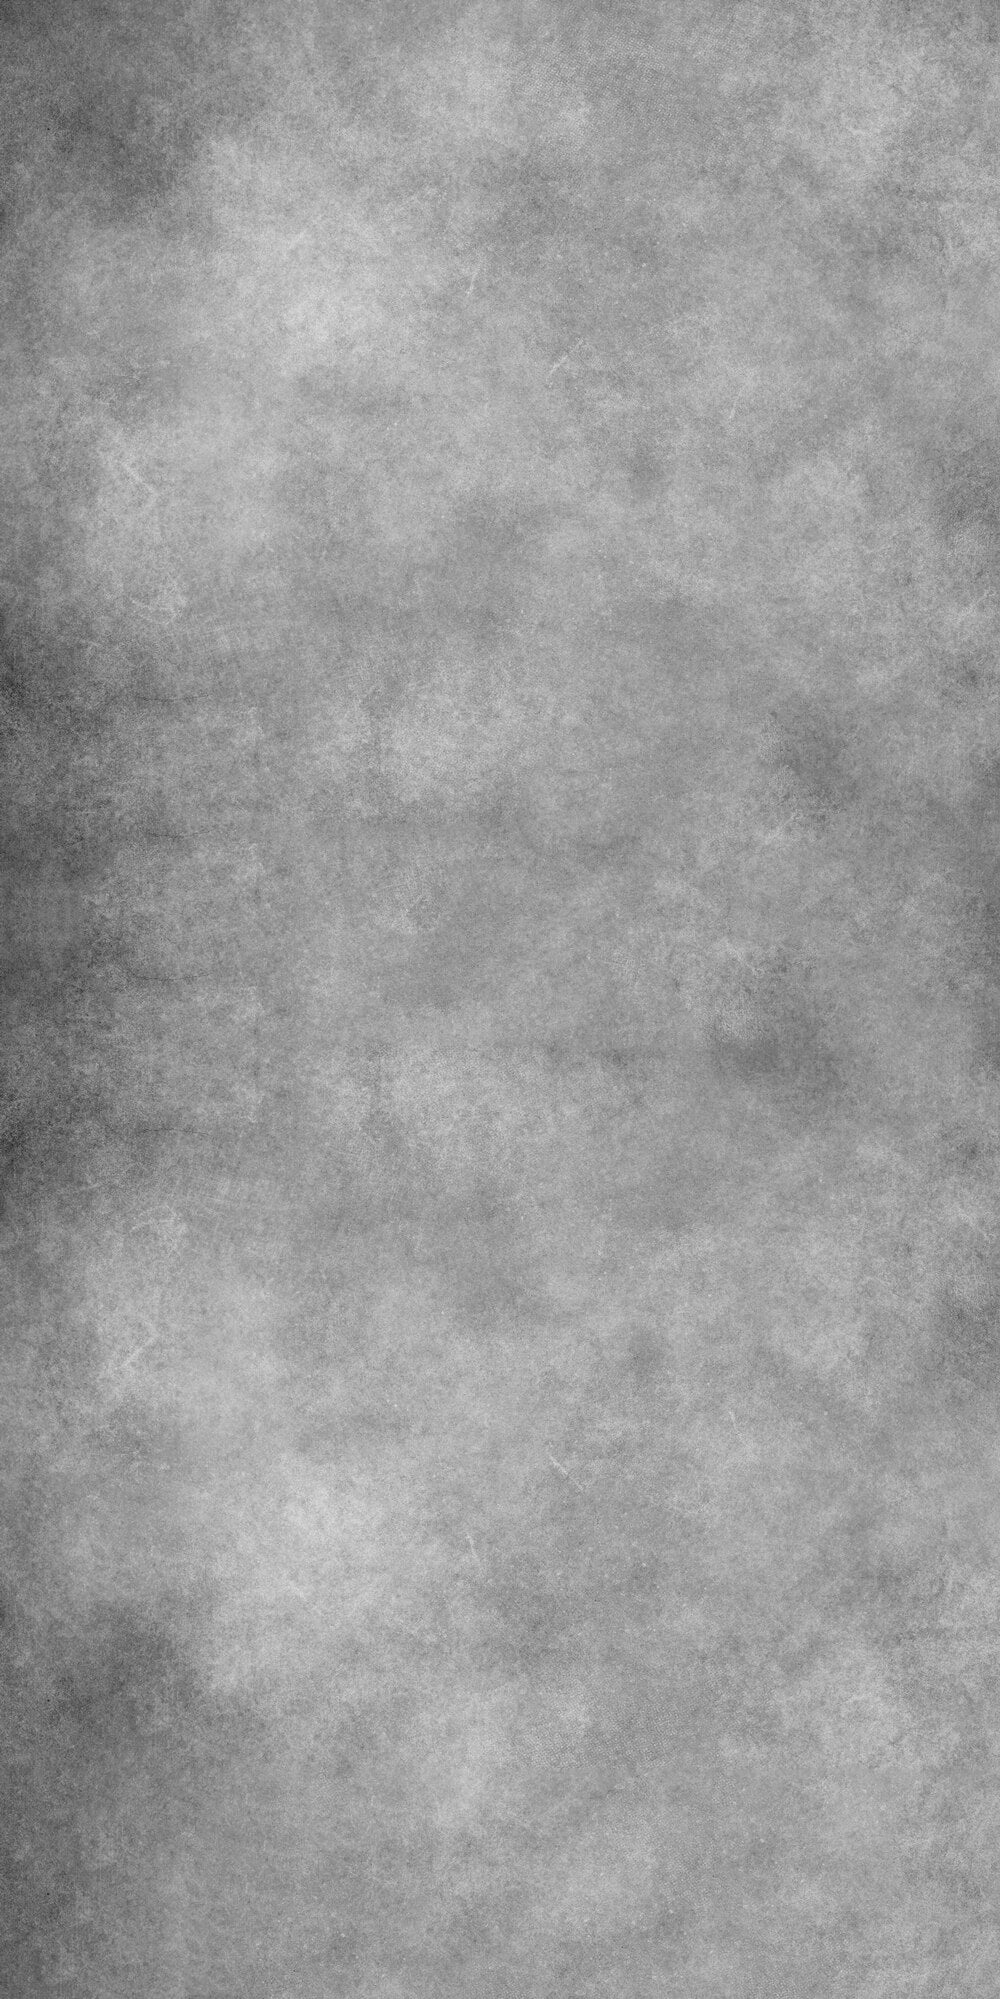 Retro Gray Sweep Abstract Photography Backdrop S-2877